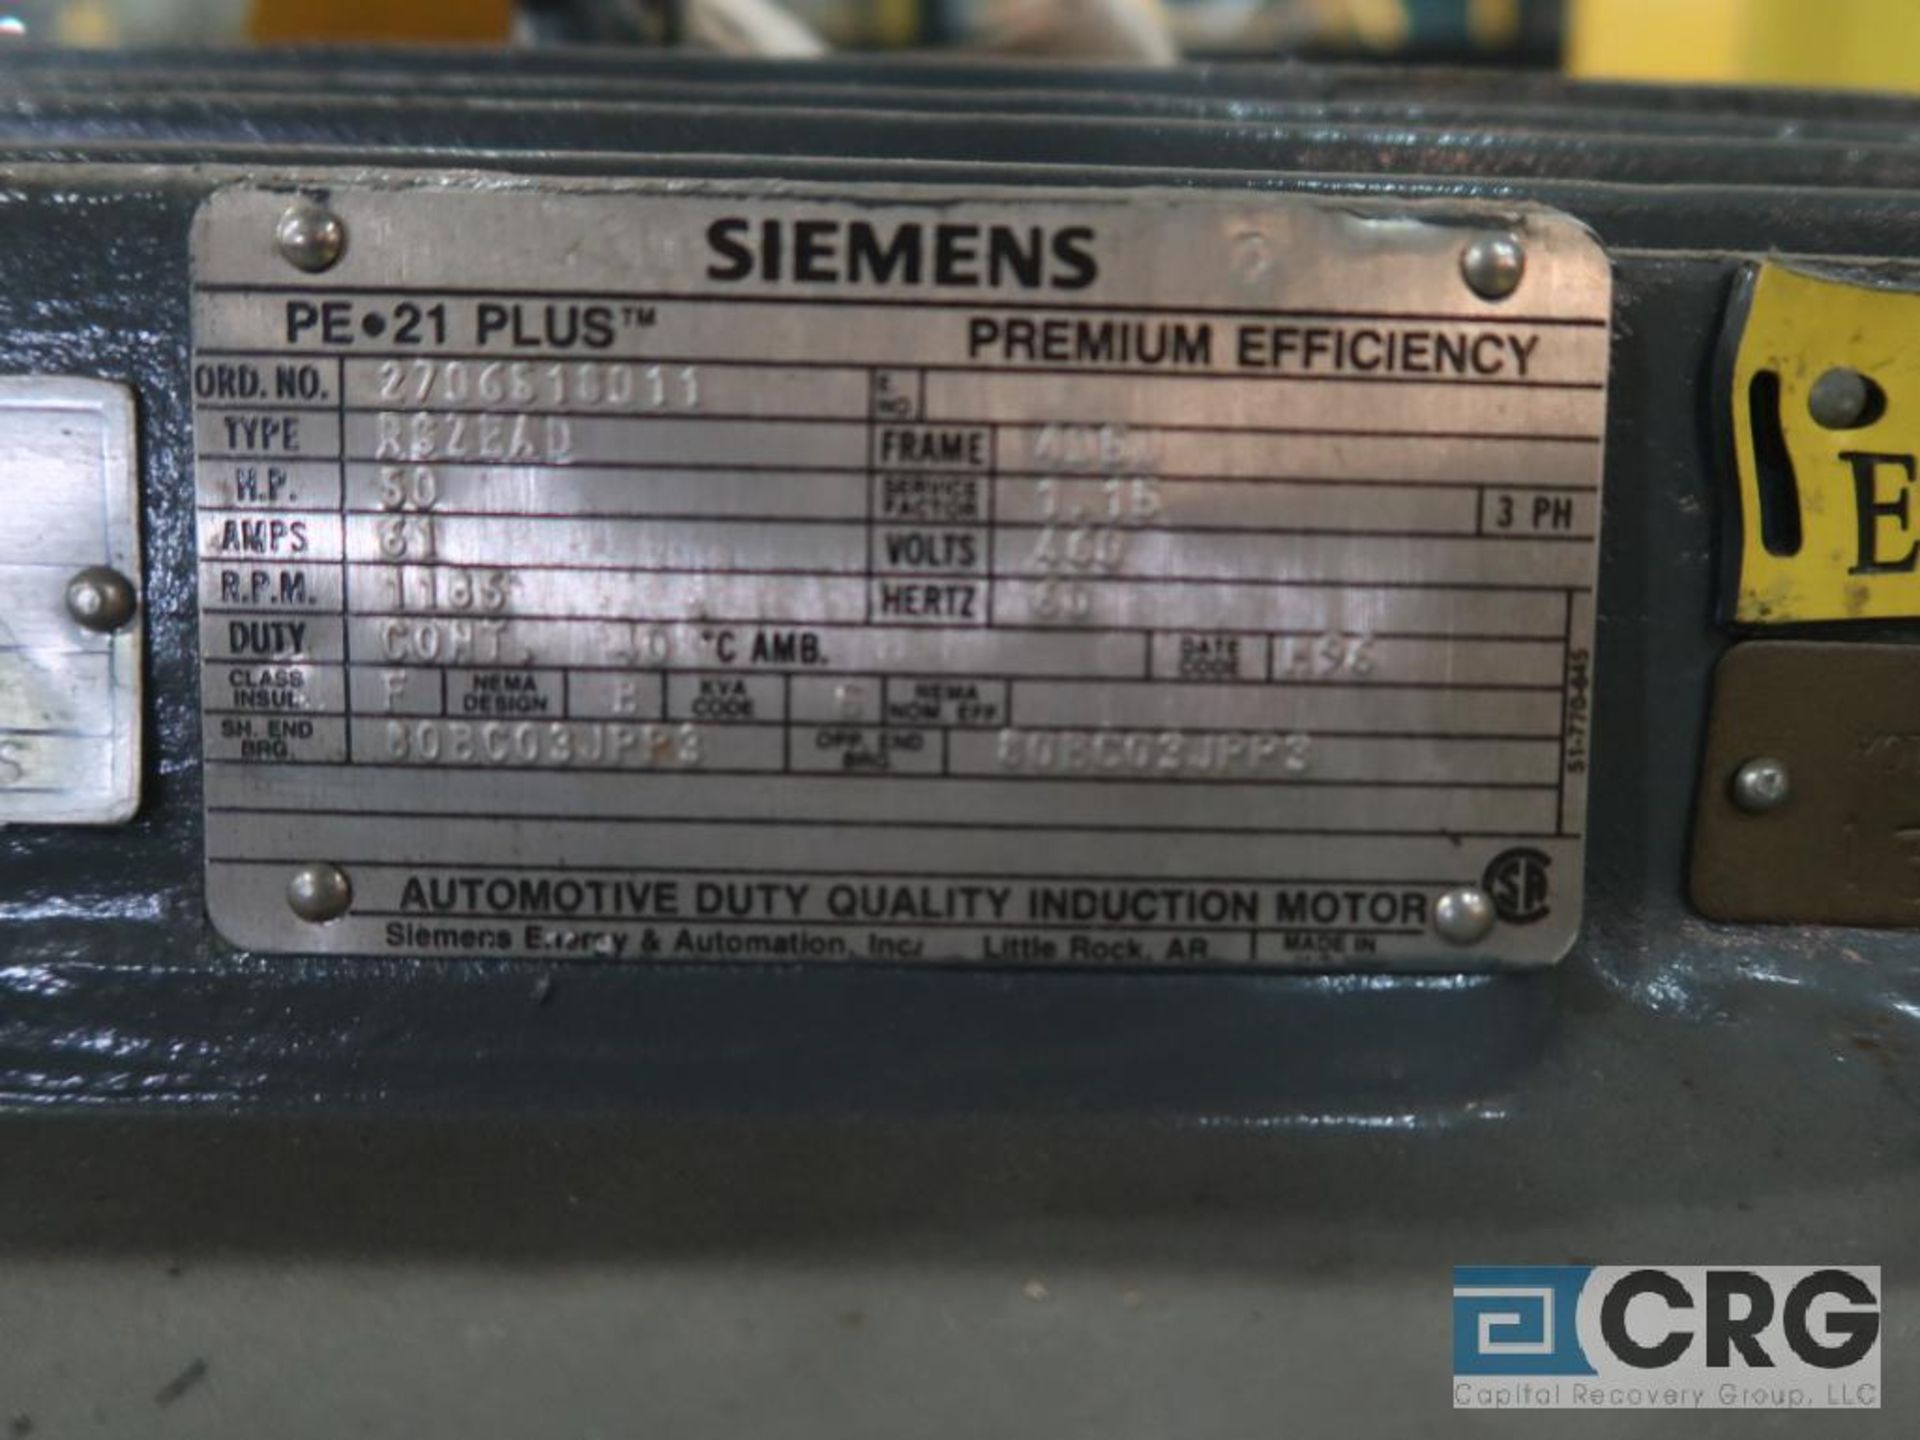 Siemens PE-21 PLUS motor, 50 HP, 1,185 RPMs, 460 volt, 3 ph., 405U frame (Finish Building) - Image 2 of 2